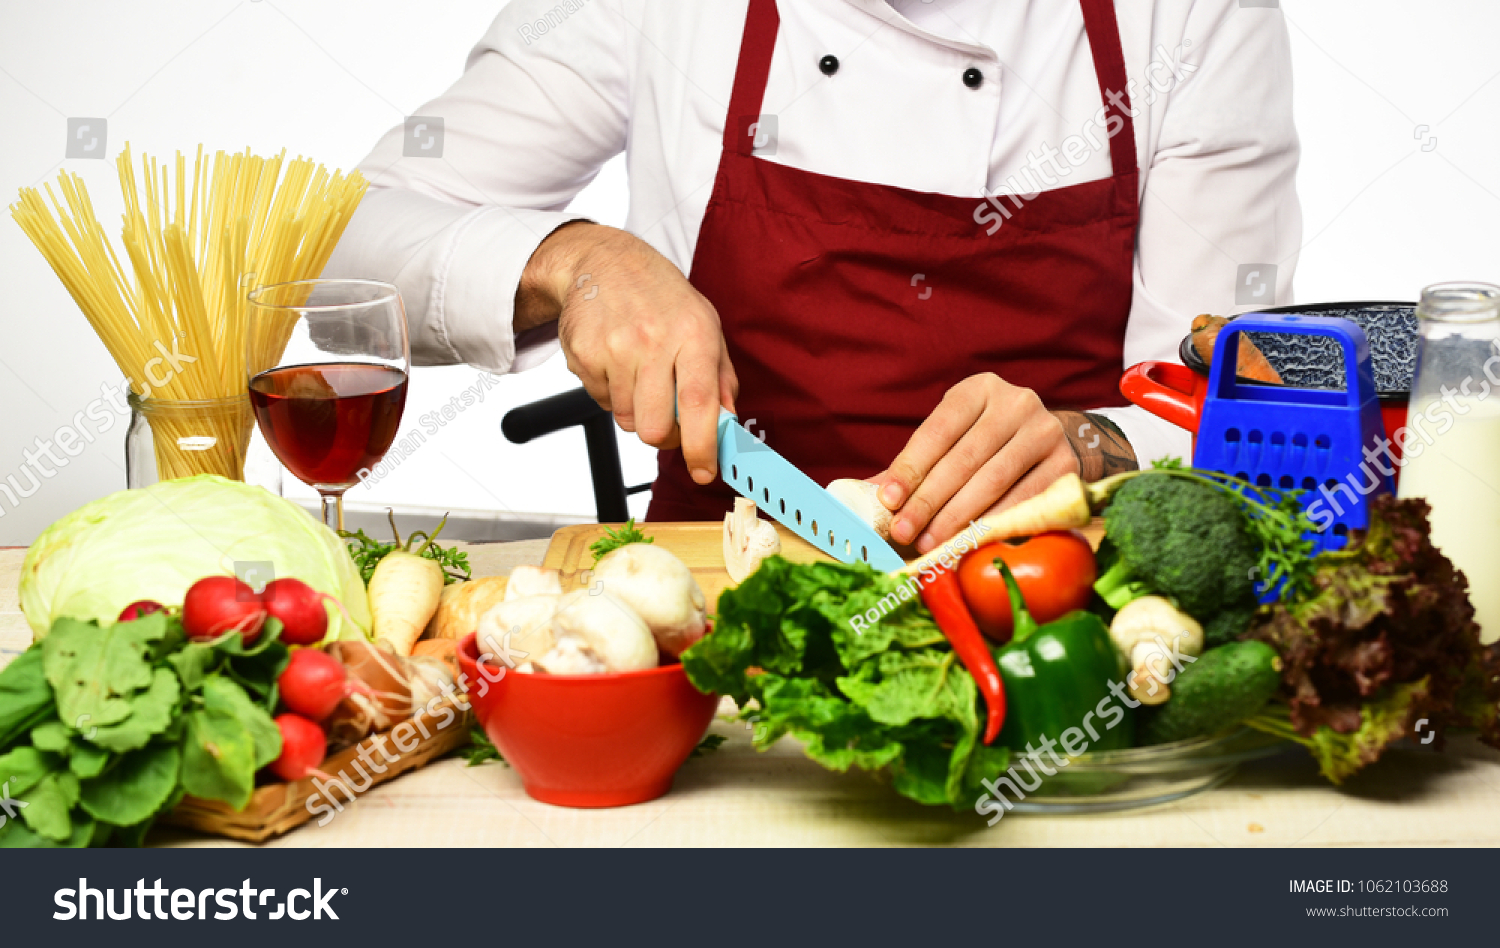 Chef cooking food cutting mushroom. Meal preparation concept. Hands hold knife preparing vegetables #1062103688